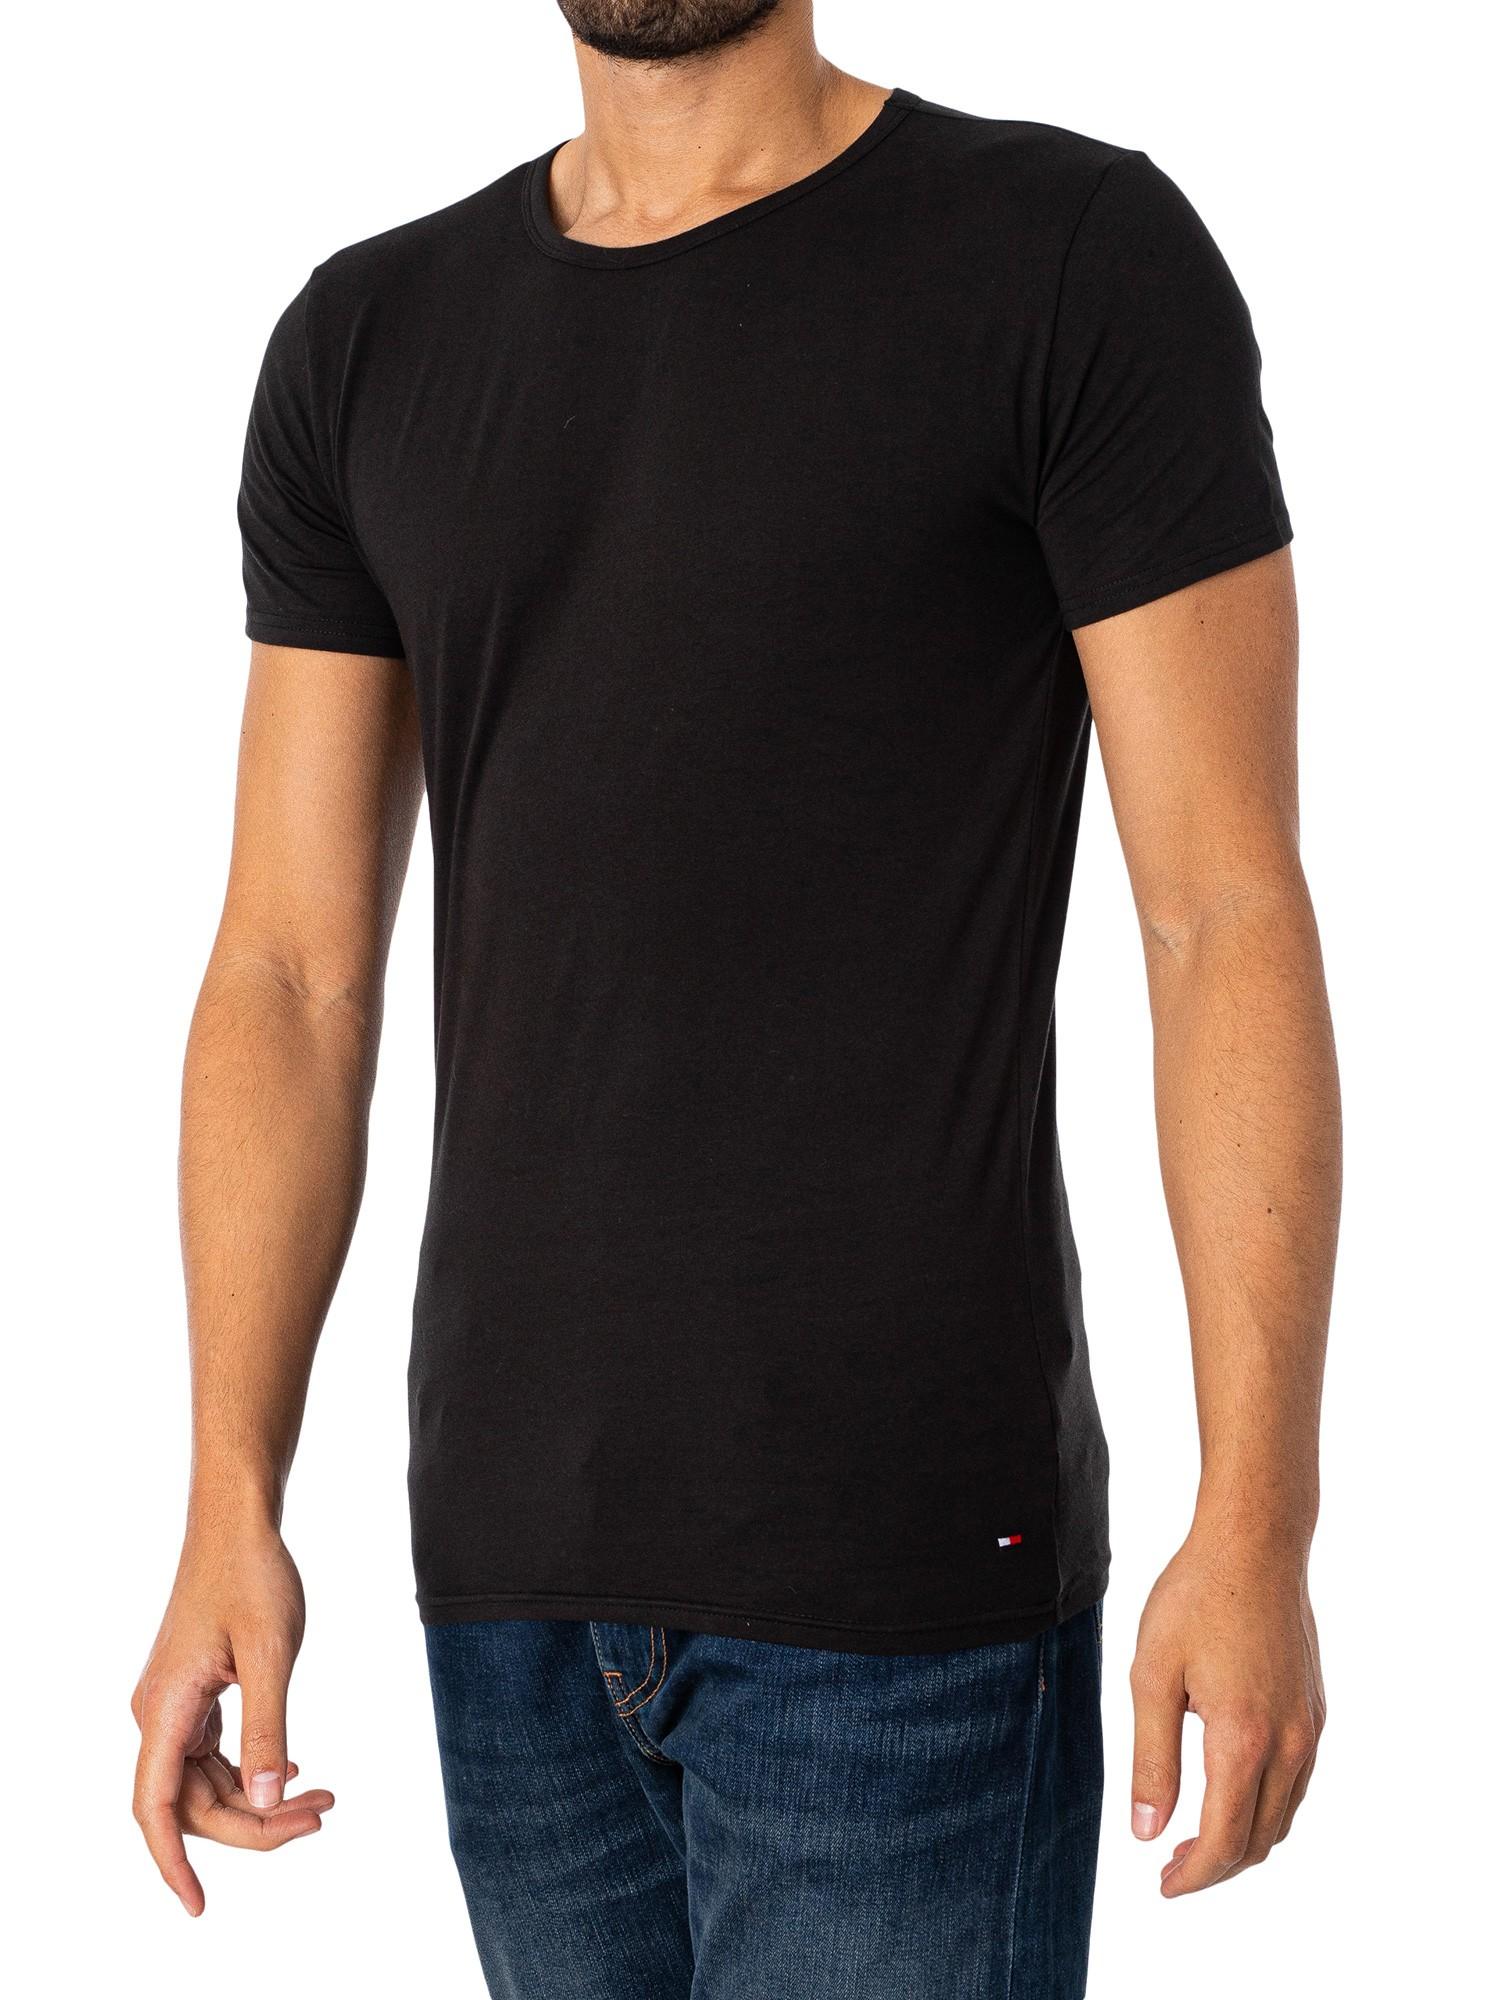 Pennenvriend Benadrukken Verbinding verbroken Tommy Hilfiger S Clothes - Shirt - Stretch Crew Neck Tee - 3 Pack - Black -  Size for Men | Lyst